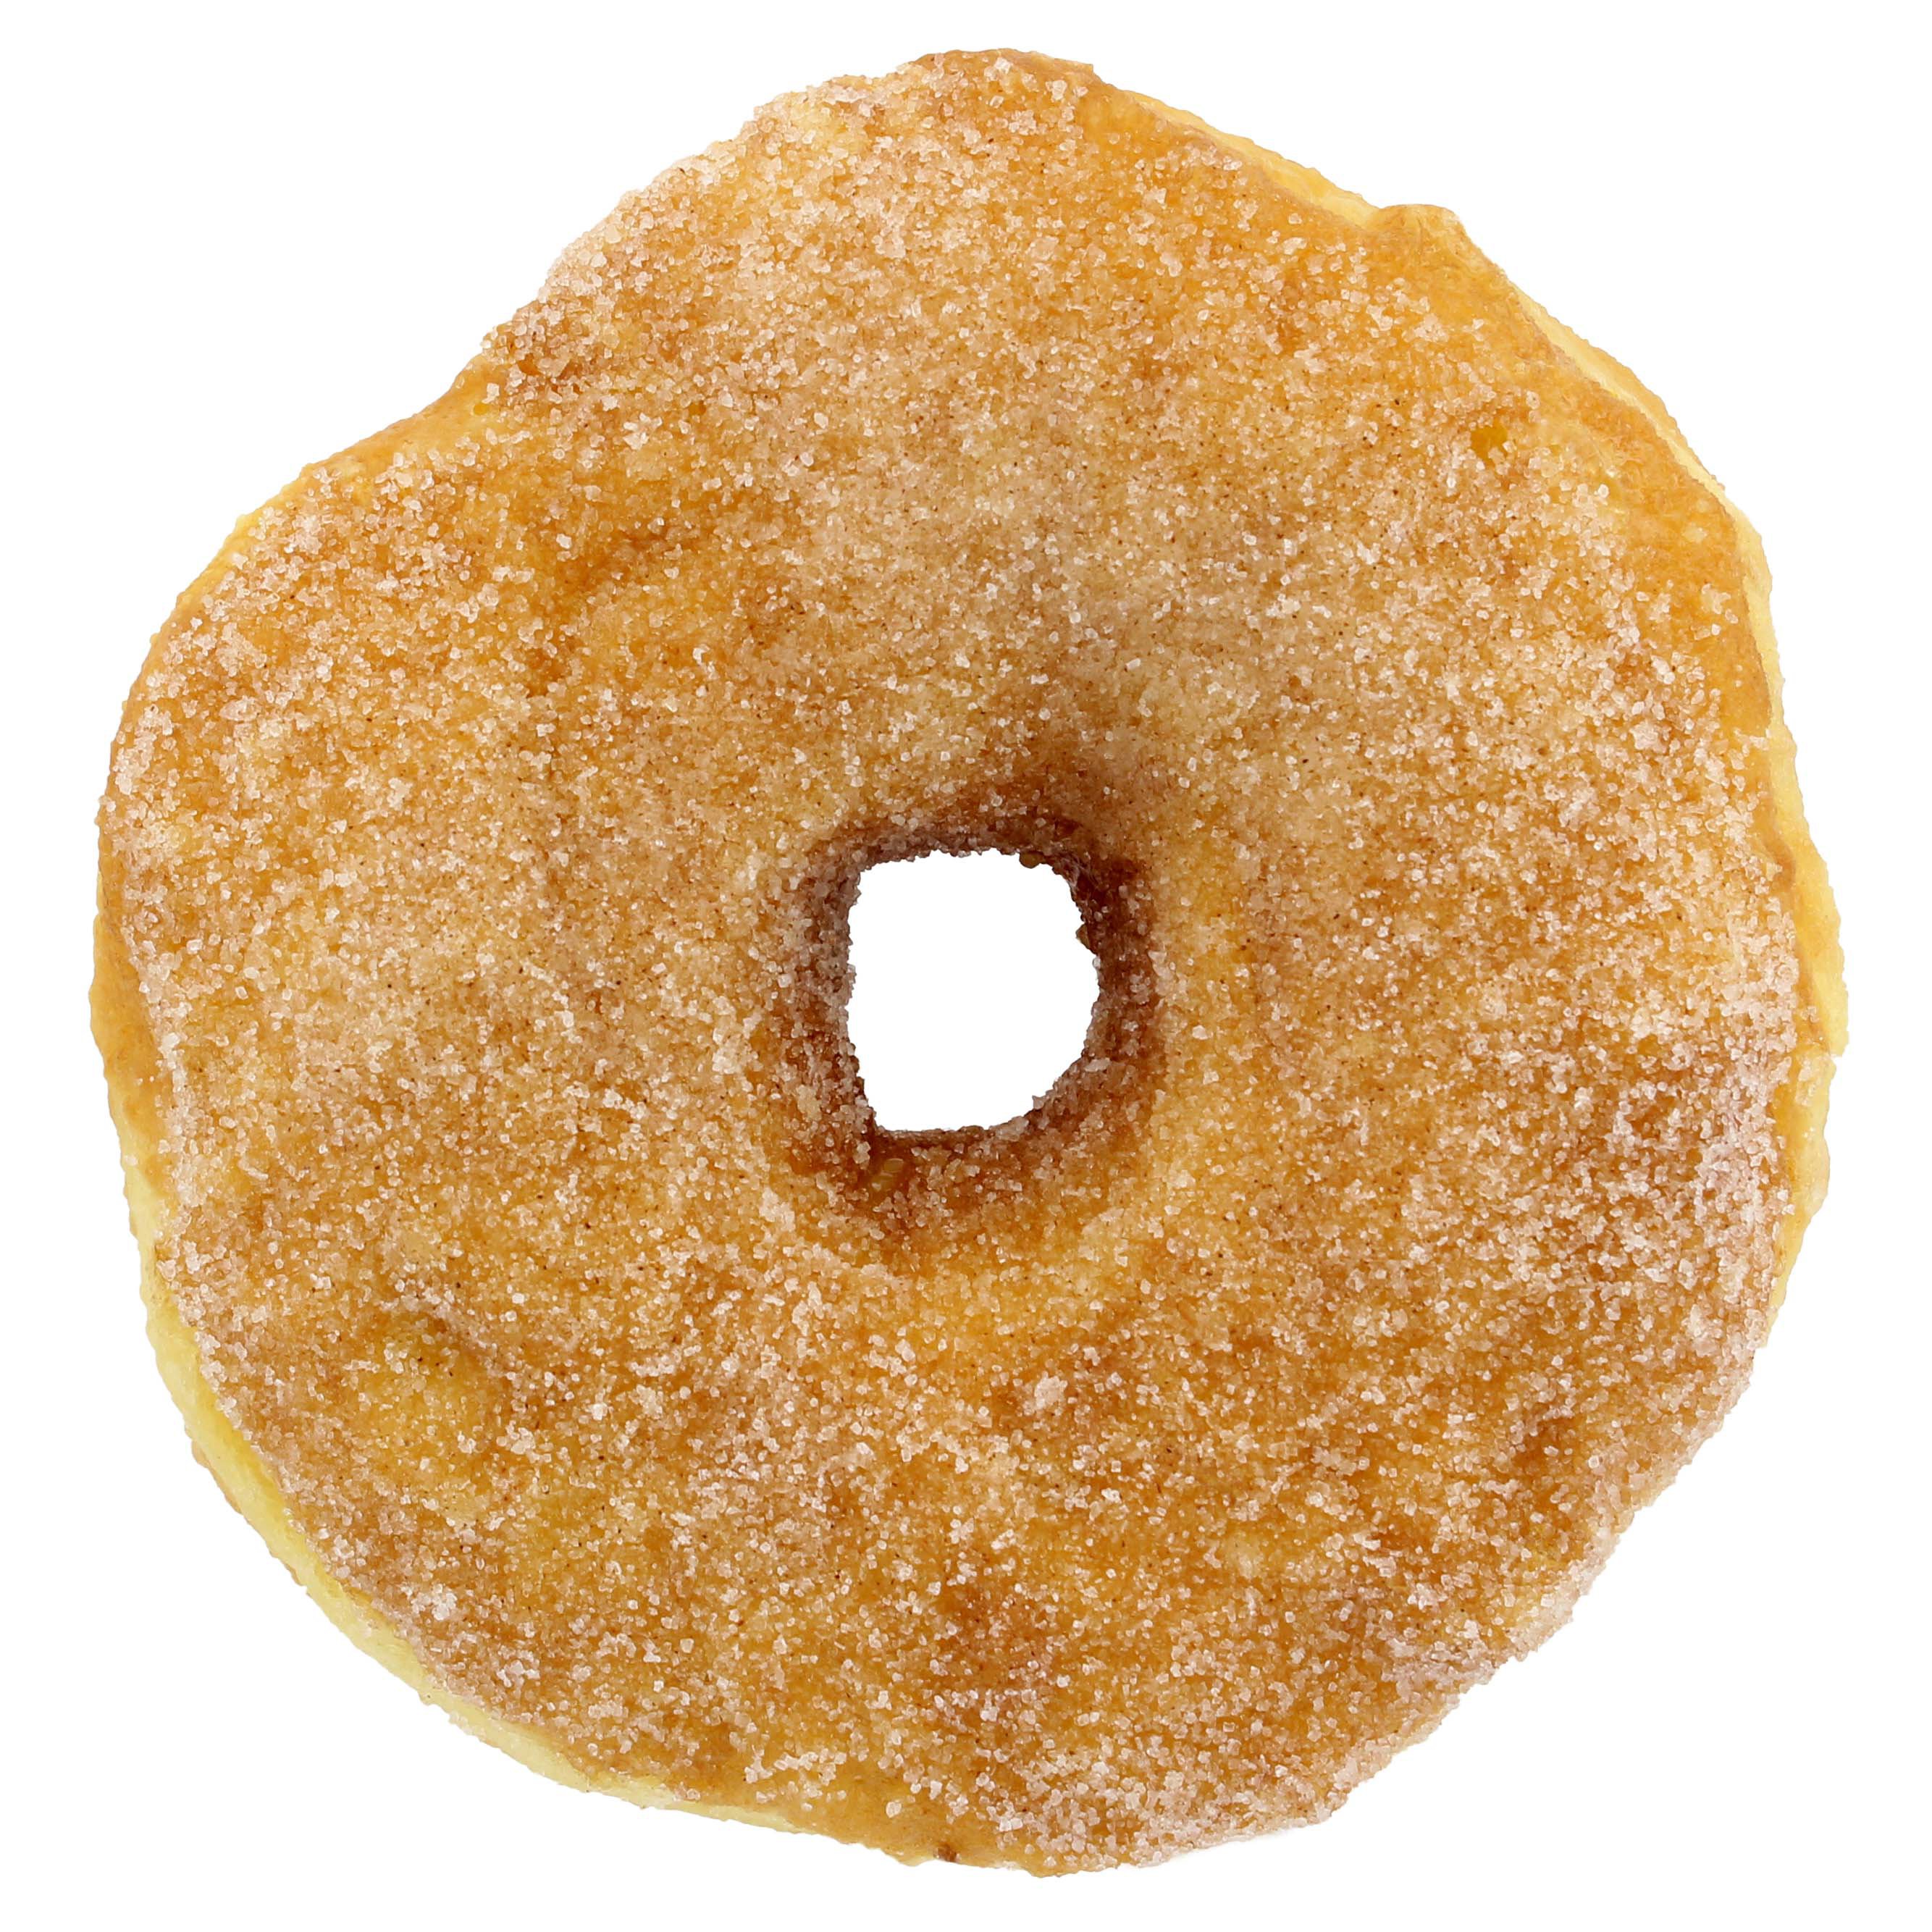 H-E-B Cinnamon Sugar Yeast Donut - Shop Donuts at H-E-B